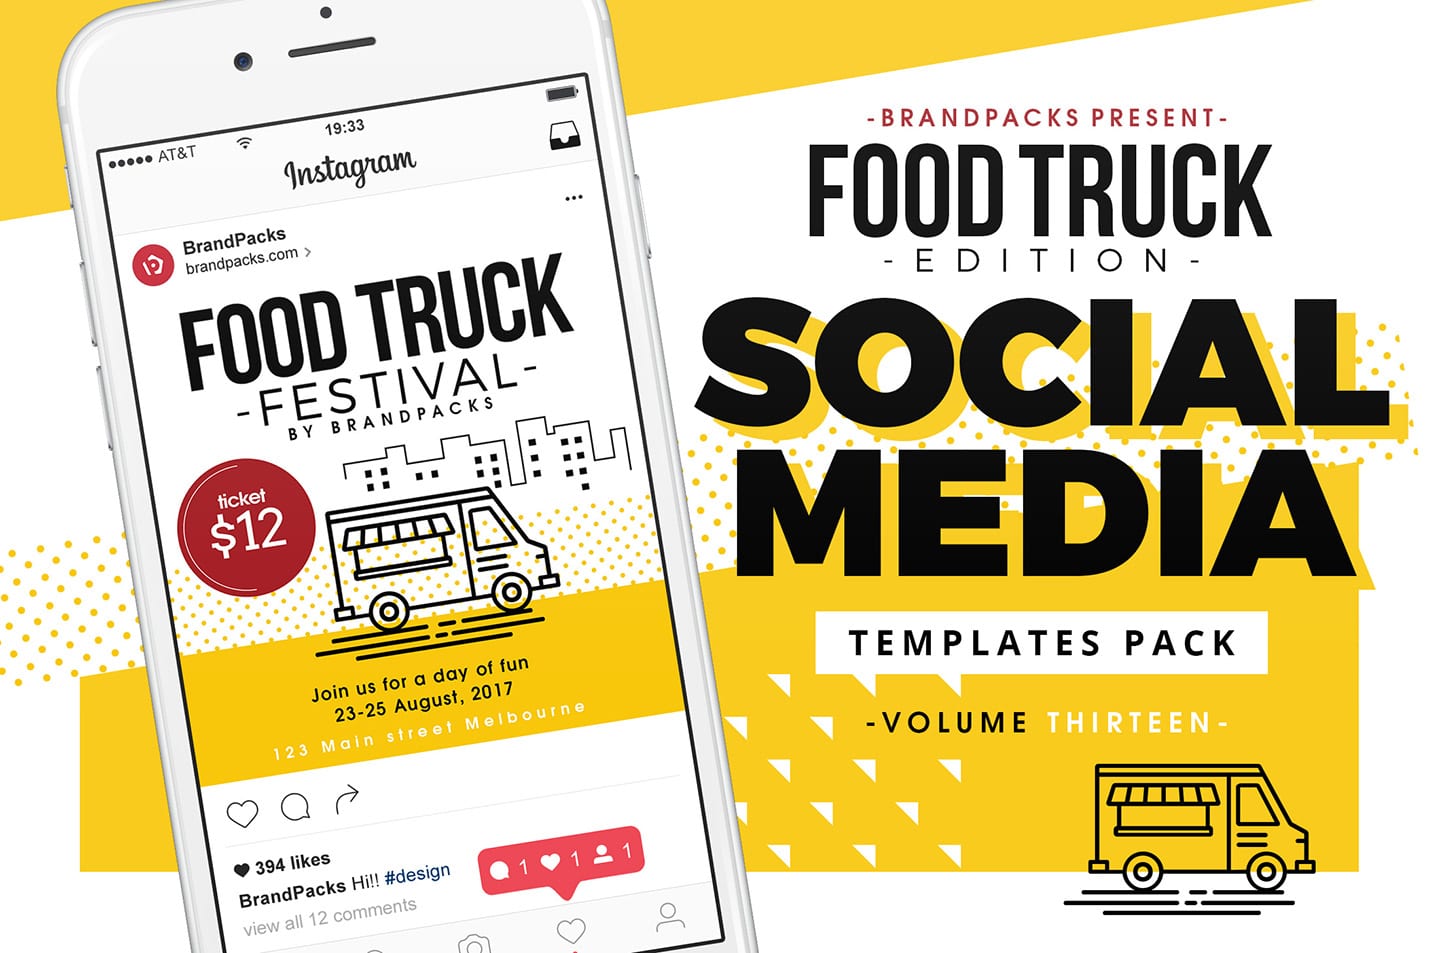 Food Truck Social Media Templates Pack